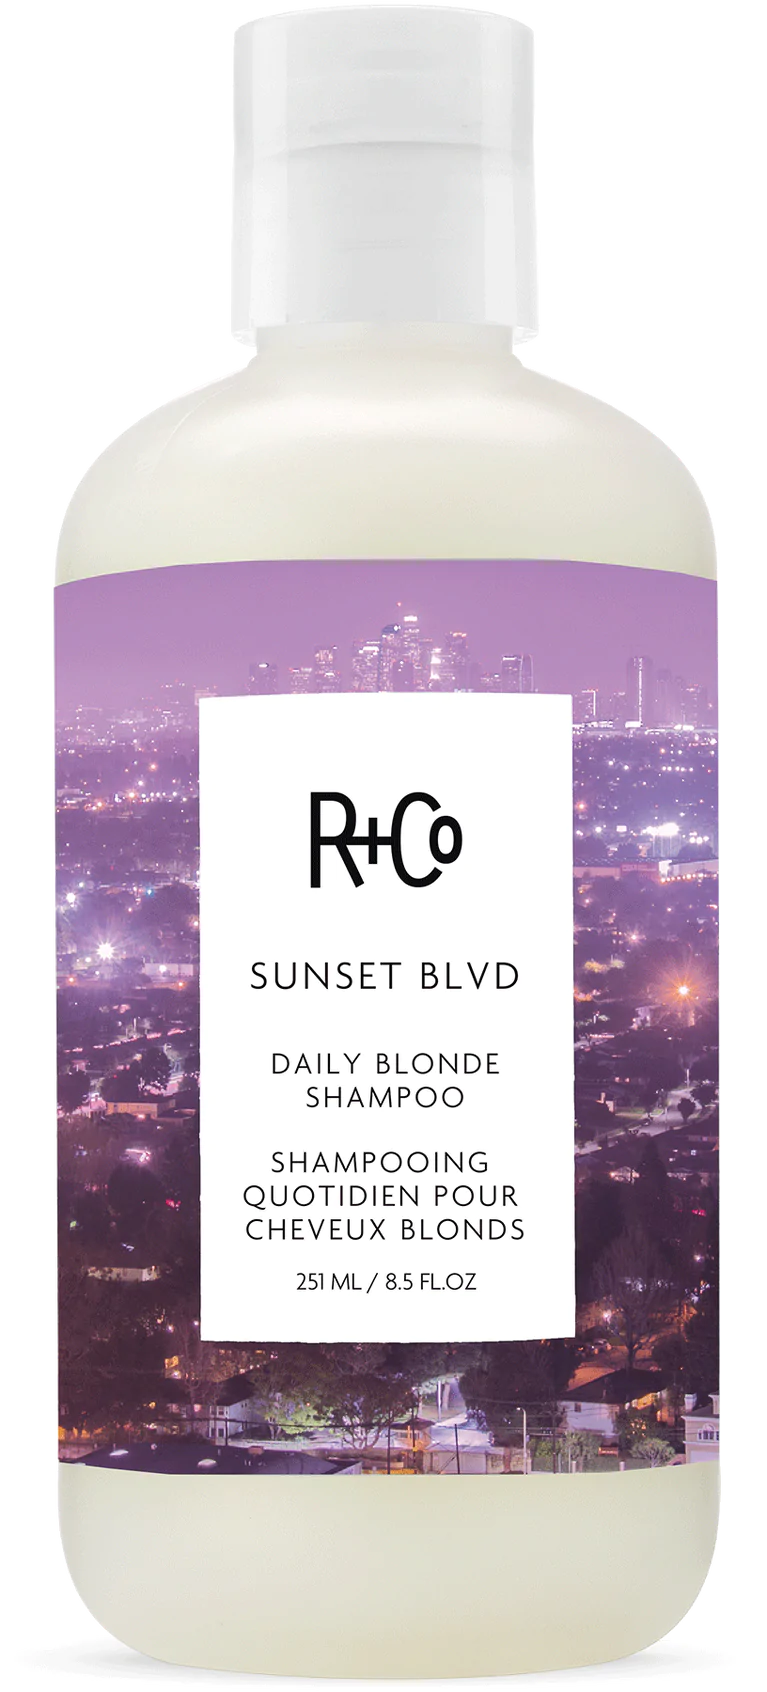 R+co Sunset BLVD Blonde Shampoo